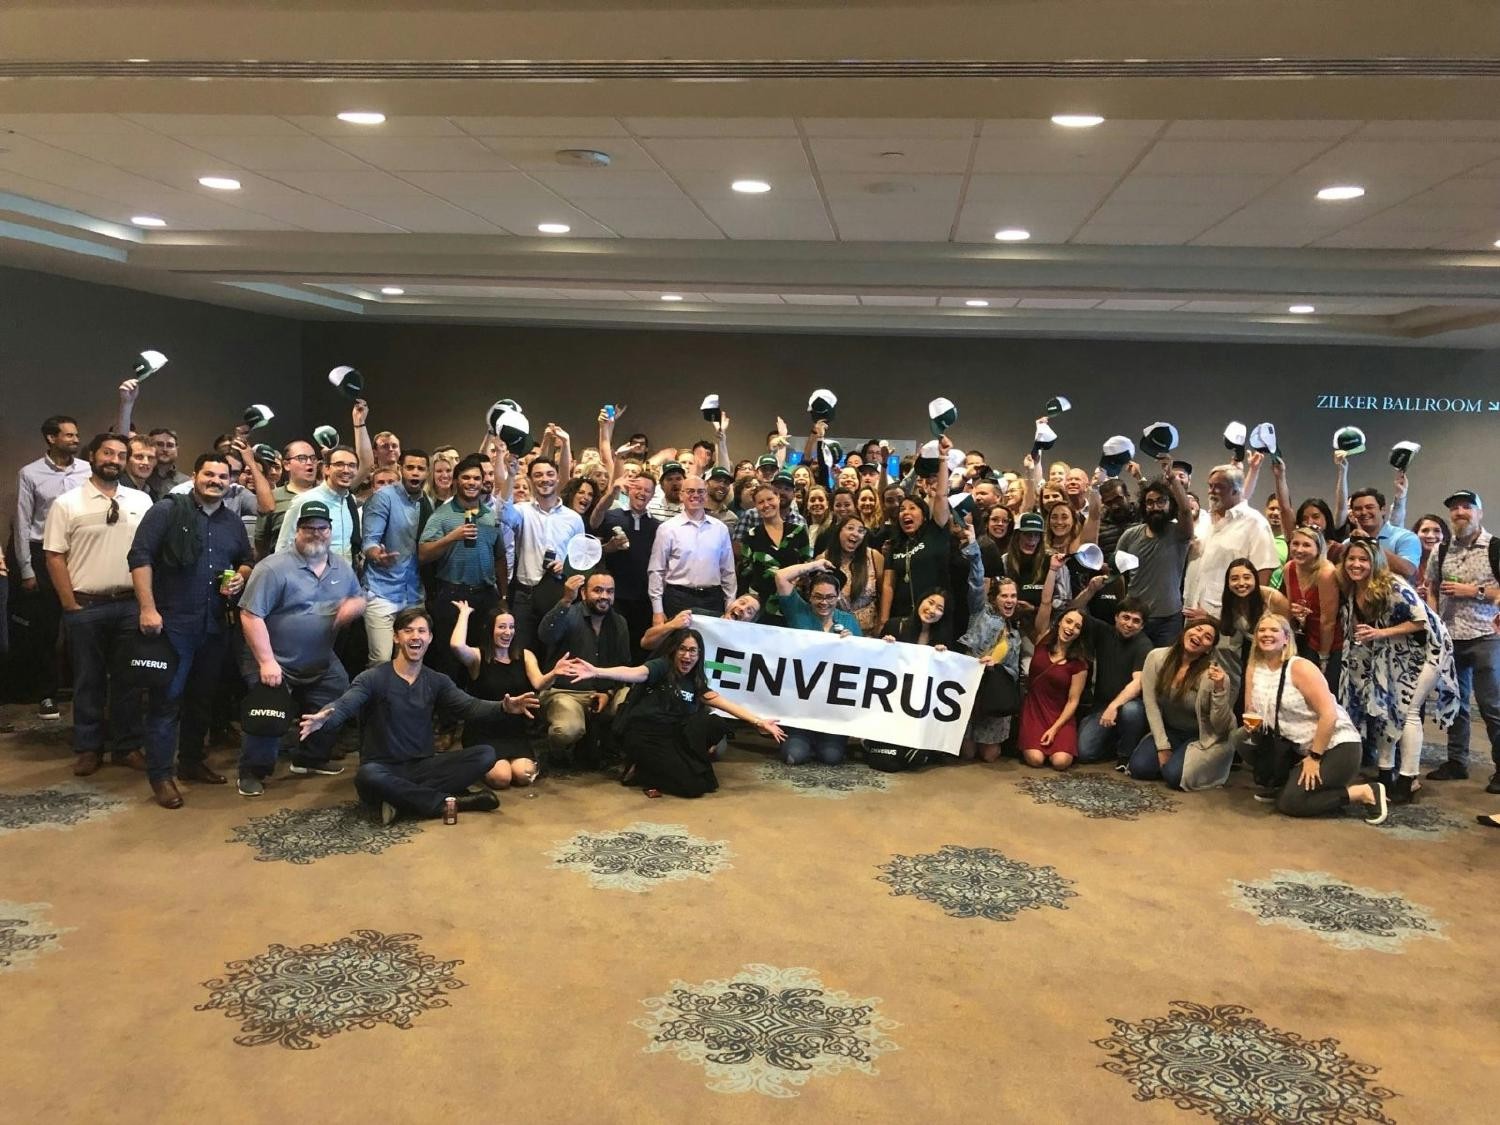 Enverus brand reveal party